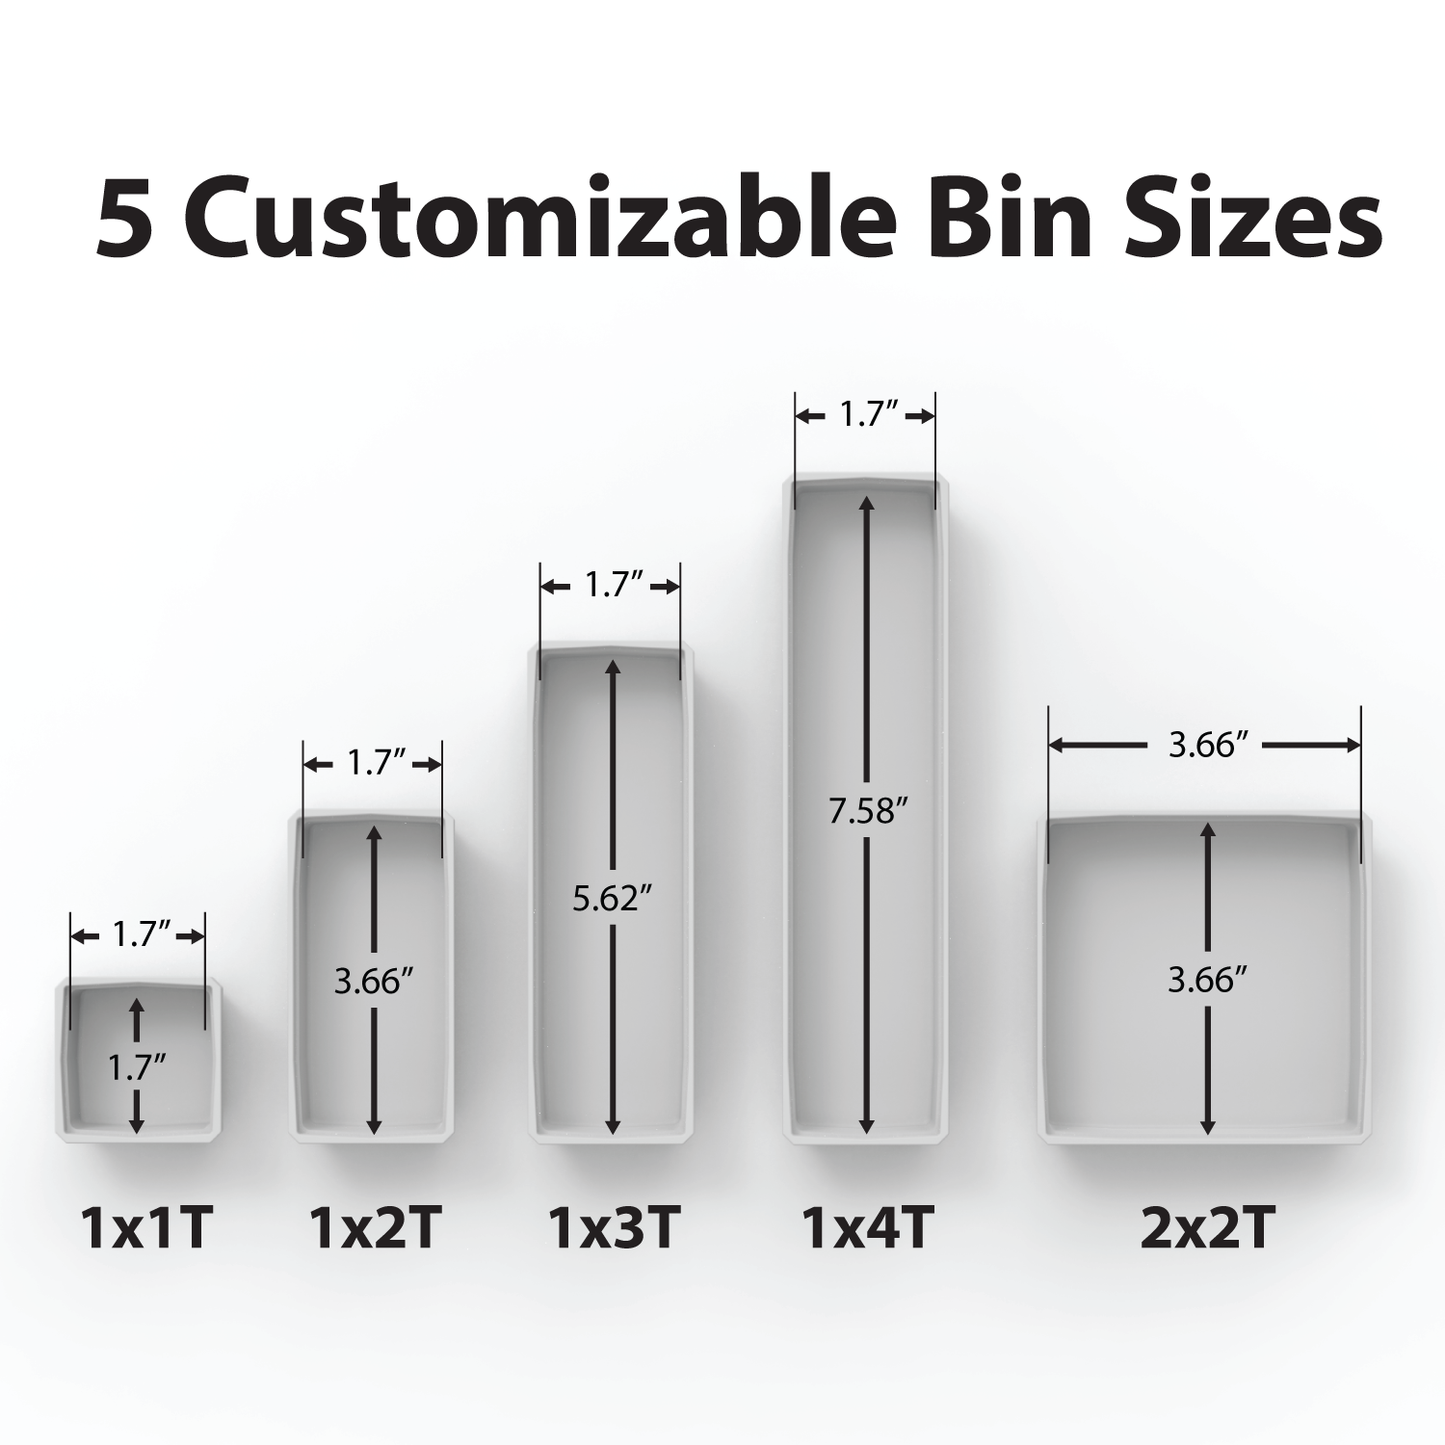 2 Customizable 2x2T (Thin) Bins